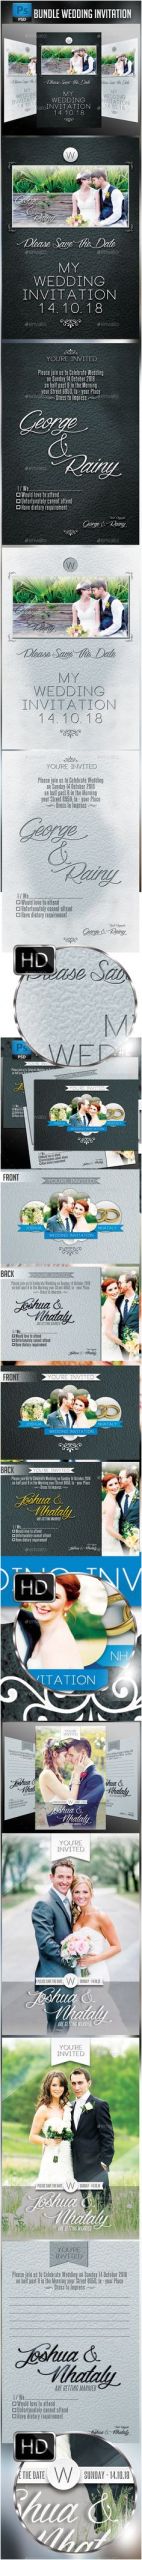 144d015736f9298e4422eb0020a866d9 wedding invitation cards templates jpg